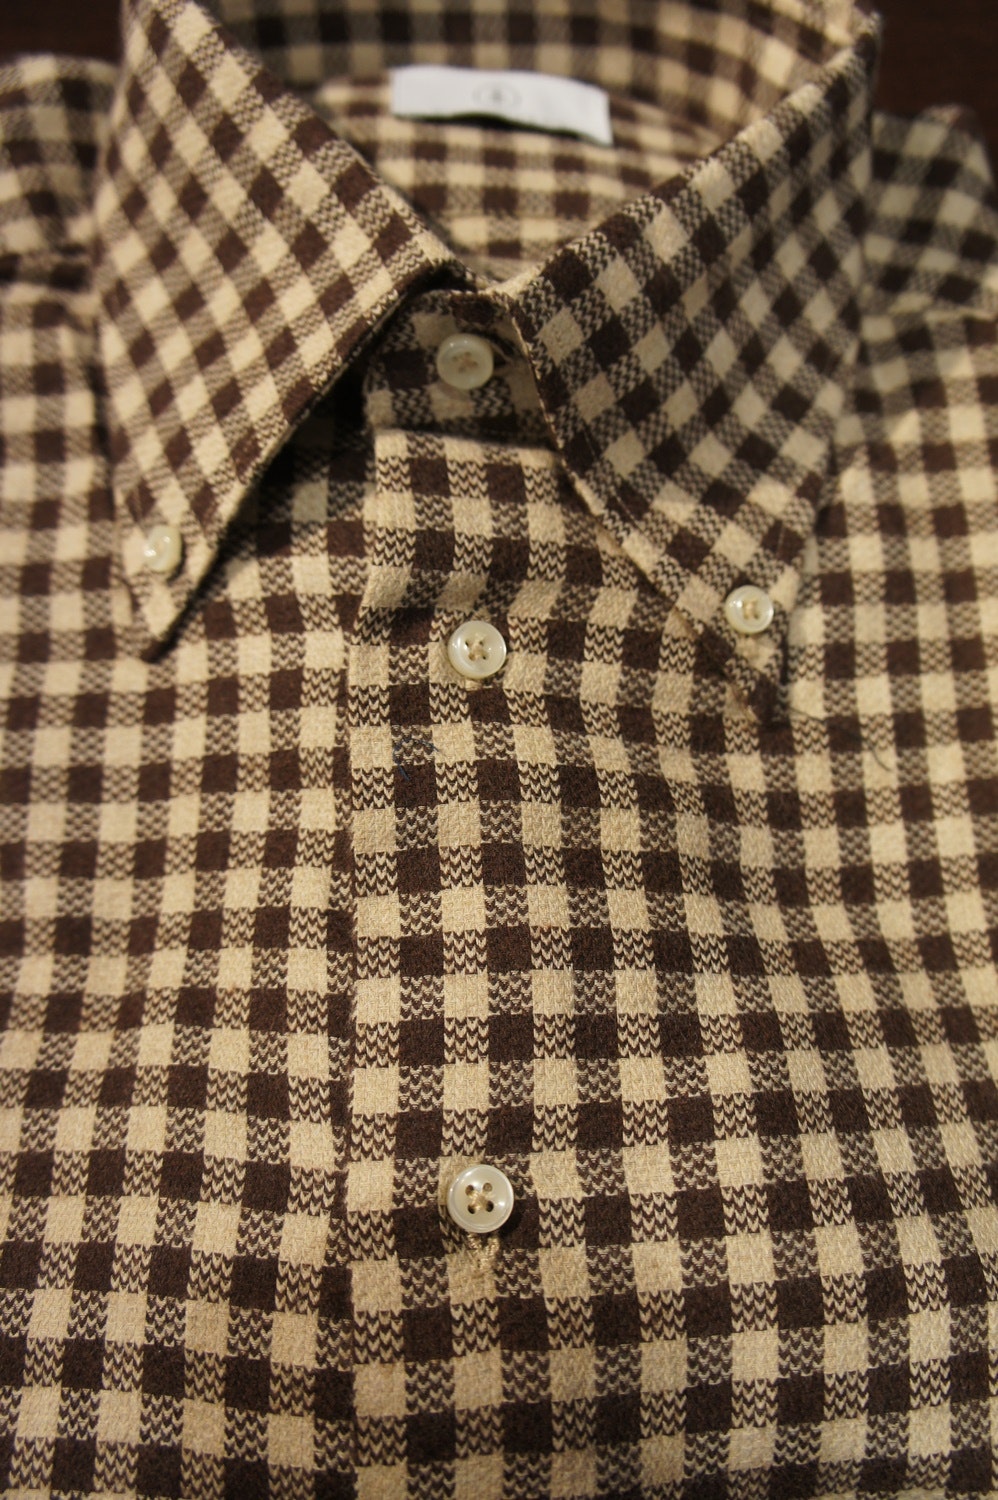 Check Flannel Shirt - Brown/Beige